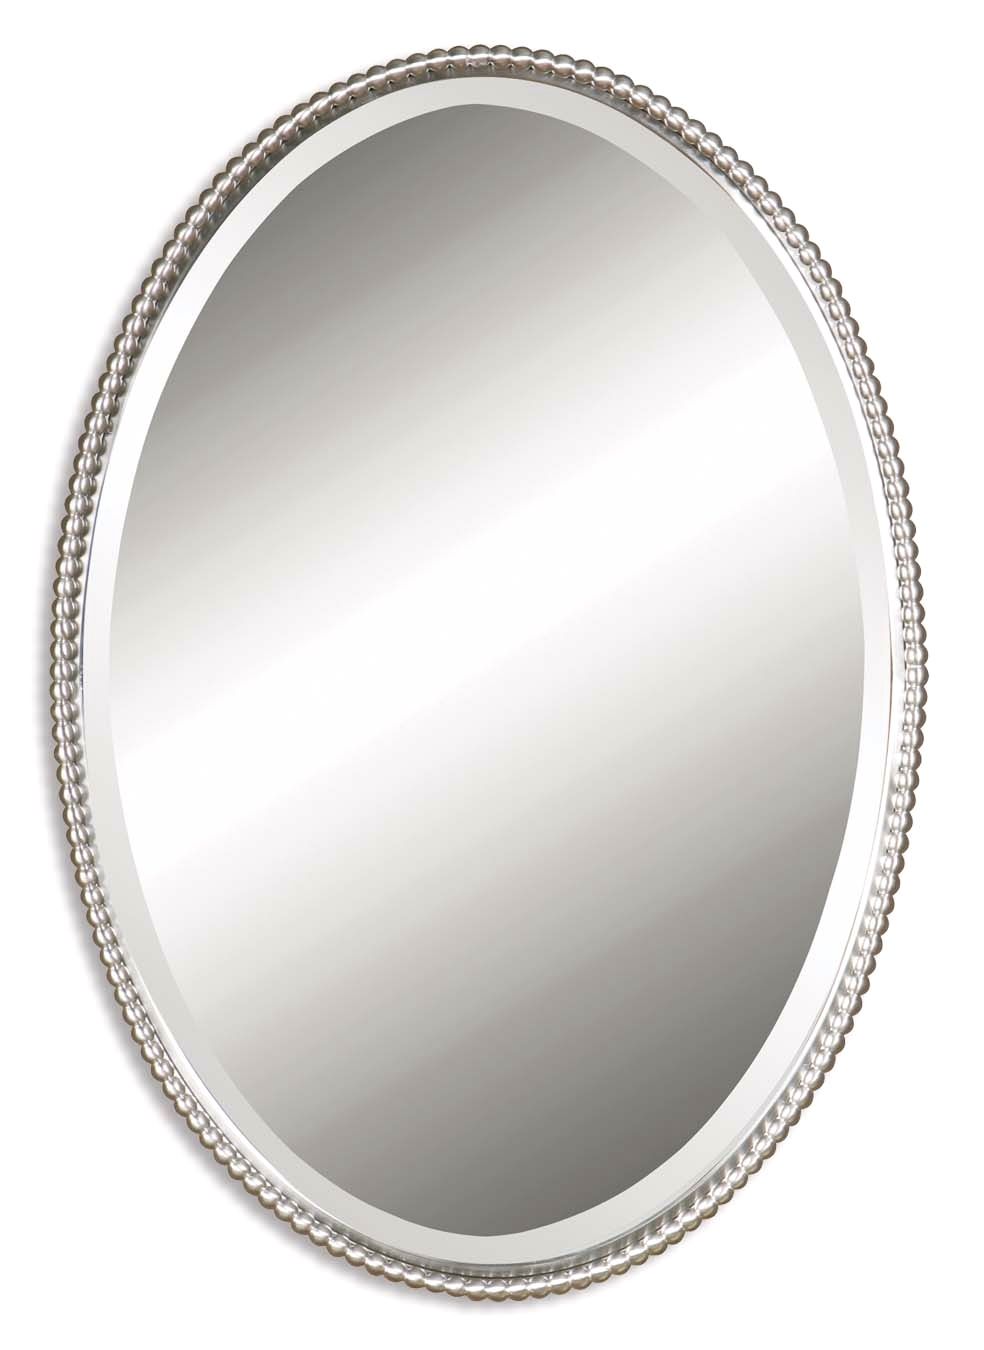 Sherise Modern Brushed Nickel Oval Mirror 01102 B Regarding Nickel Floating Wall Mirrors (View 10 of 15)